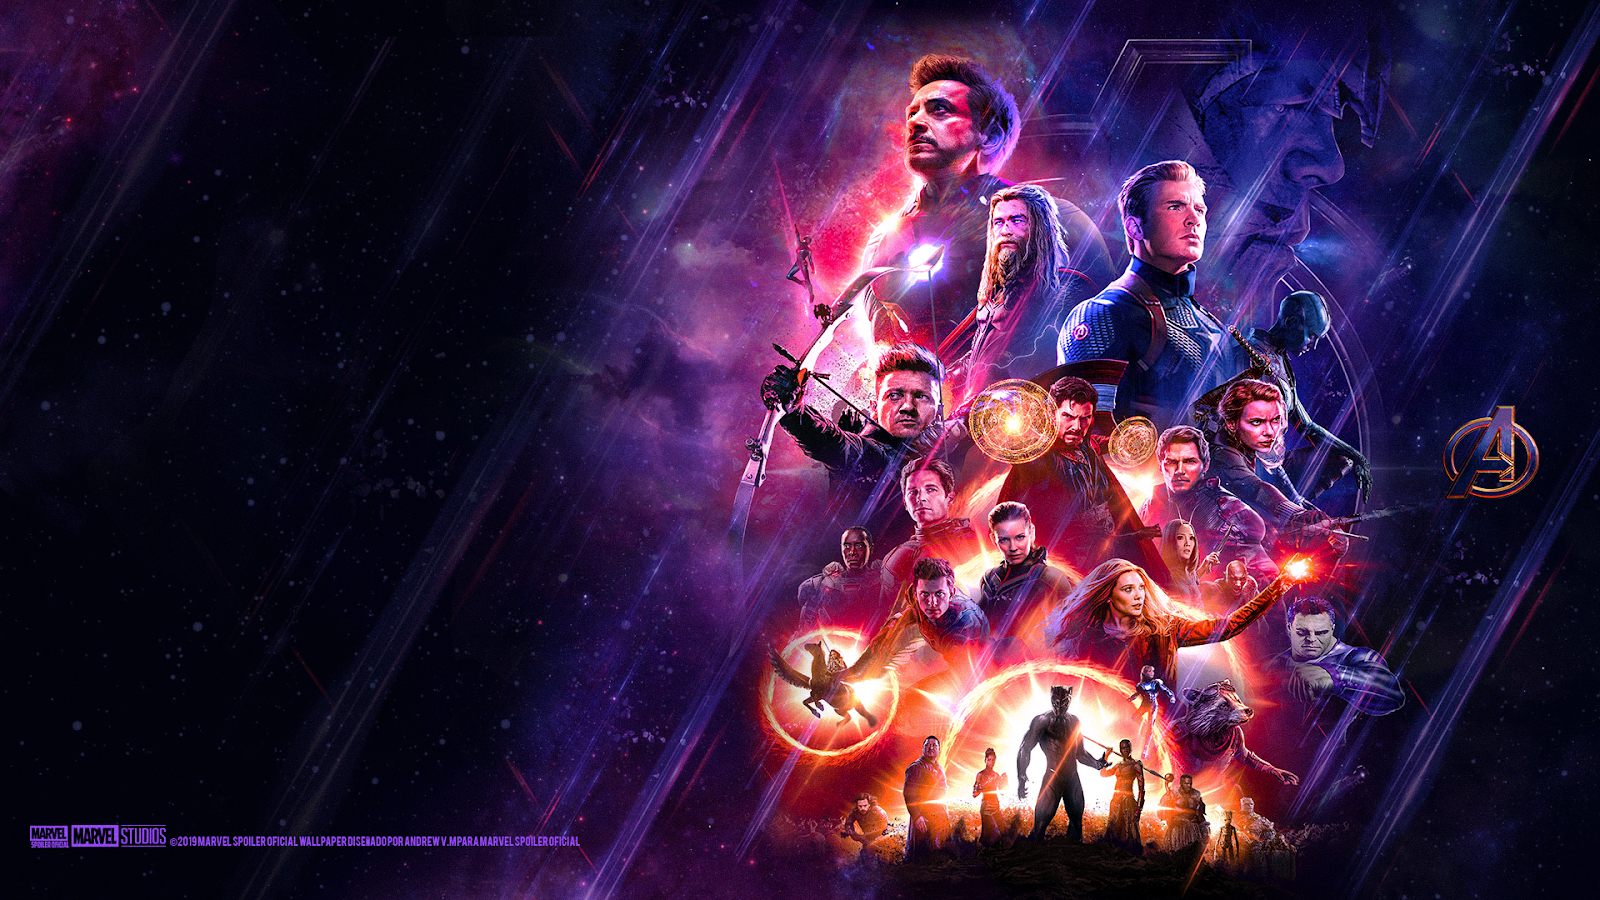 Avengers Endgame Portals Poster - HD Wallpaper 